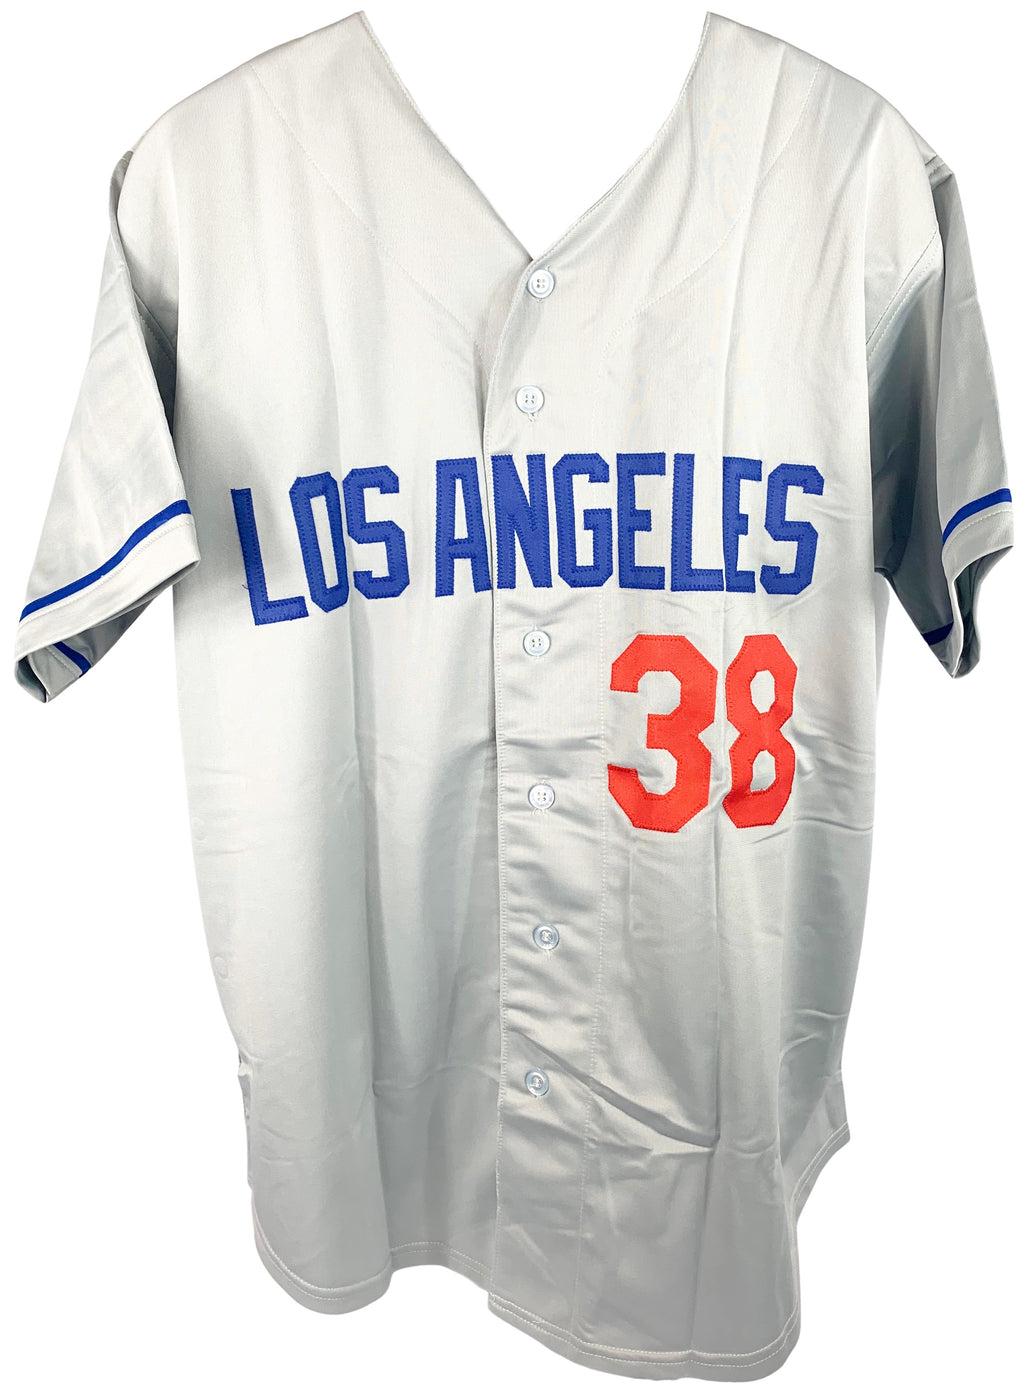 Felix Millan autographed signed jersey MLB Atlanta Braves PSA COA – JAG  Sports Marketing